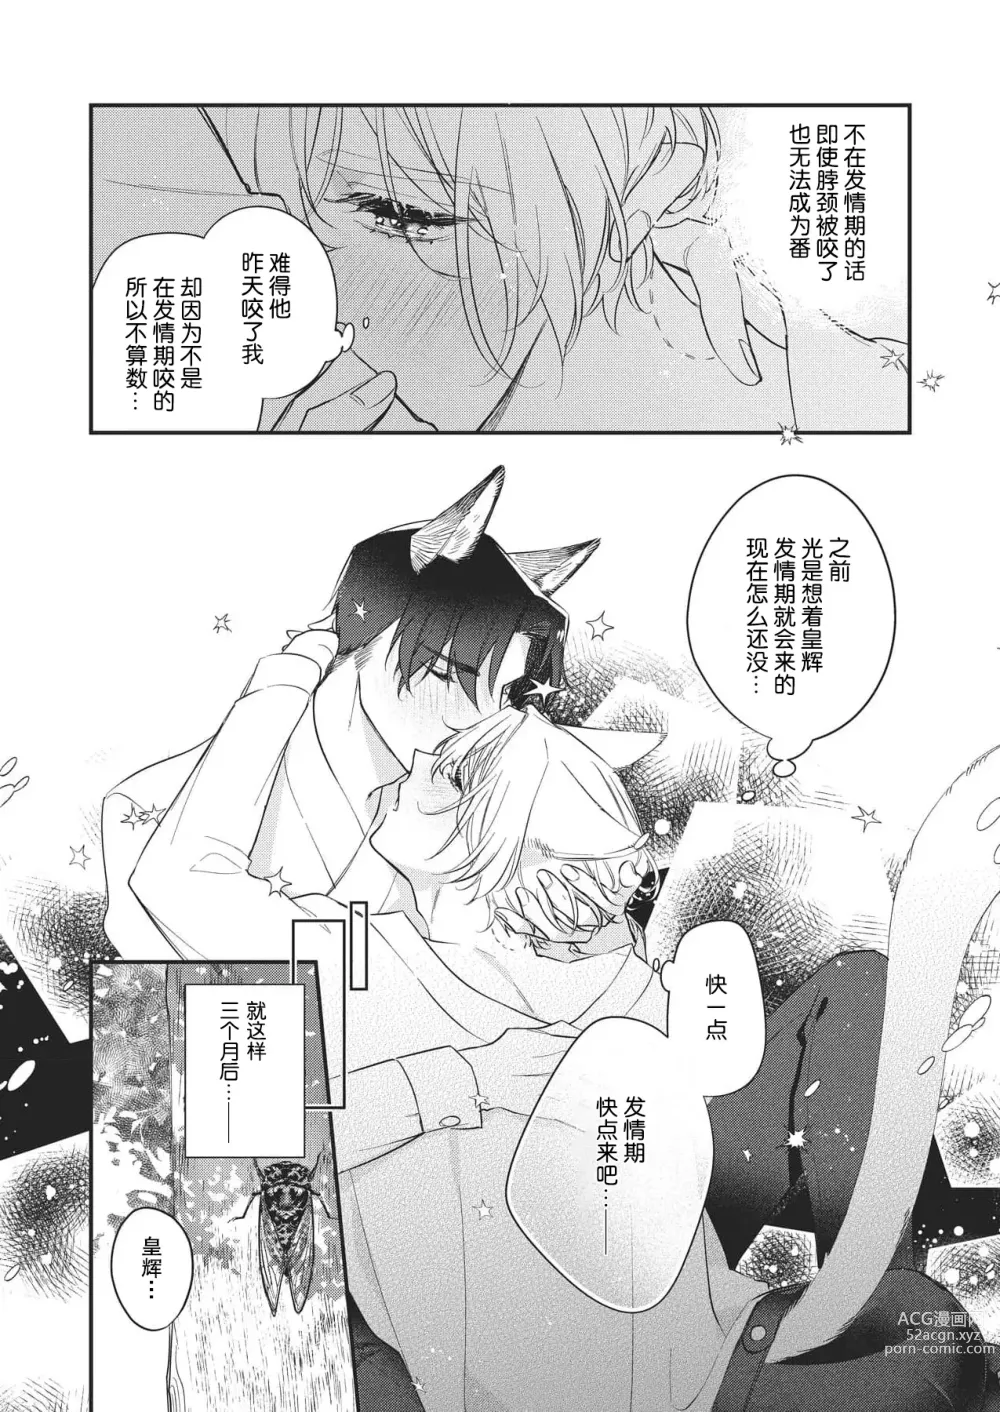 Page 173 of manga 无可奈何花落去 只叹道，命运使然 1-7 end